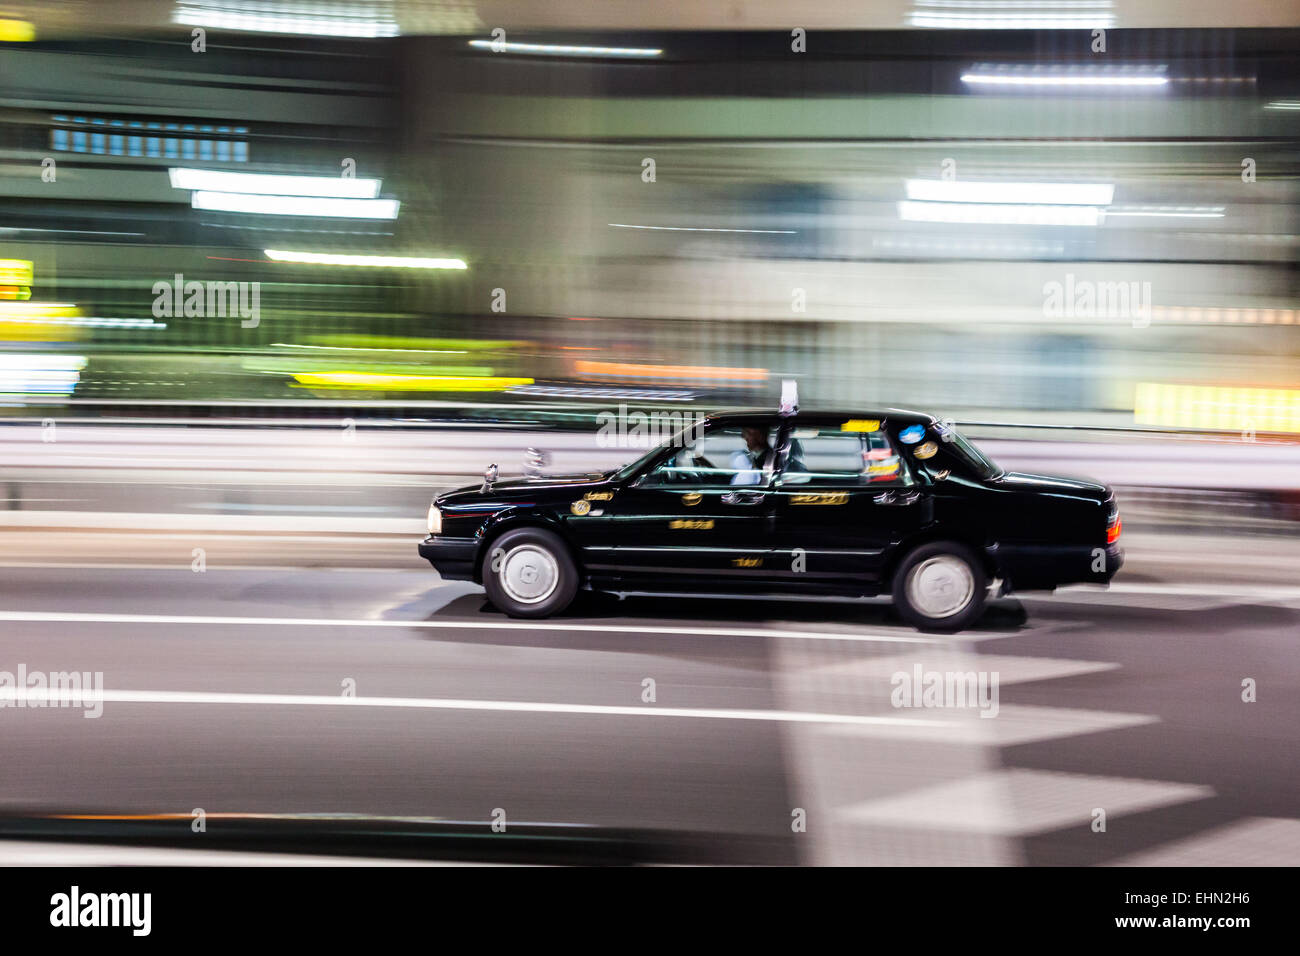 Taxi dans les rues de Tokyo, Japon. Banque D'Images